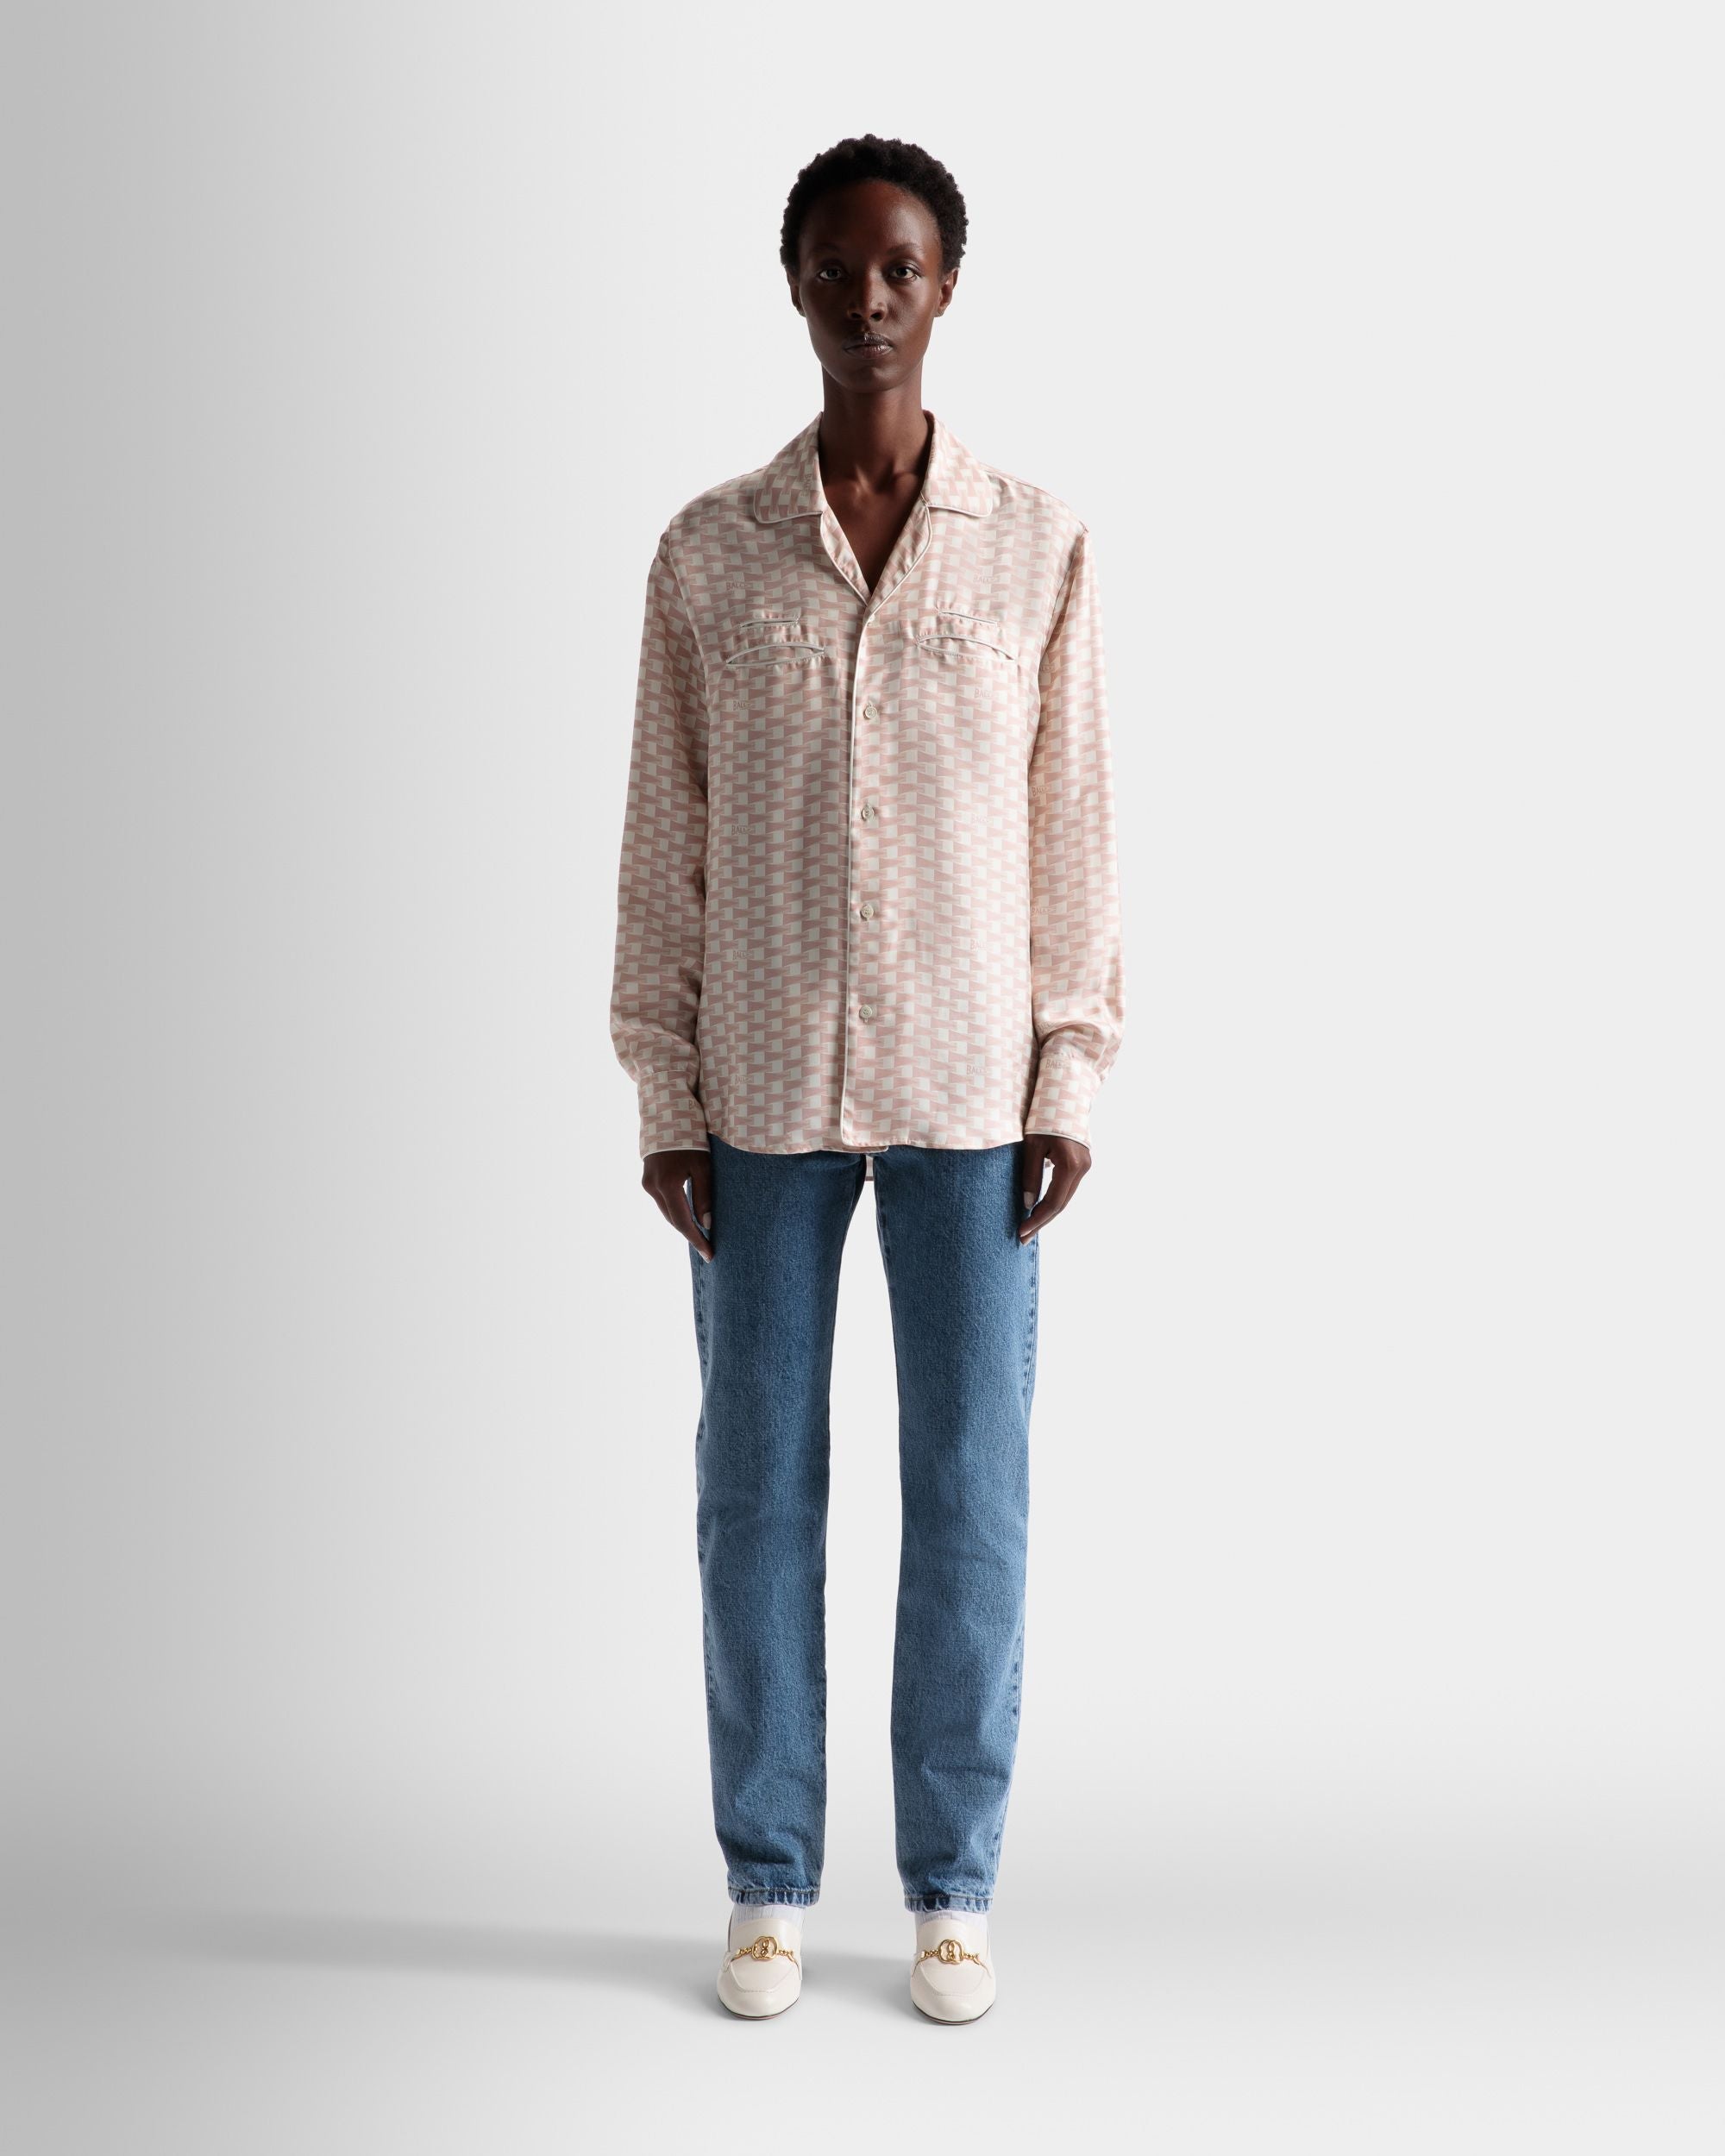 Hemd mit Pennant-Print | Herrenhemd | Seide in Dusty Petal | Bally | Model getragen Vorderseite